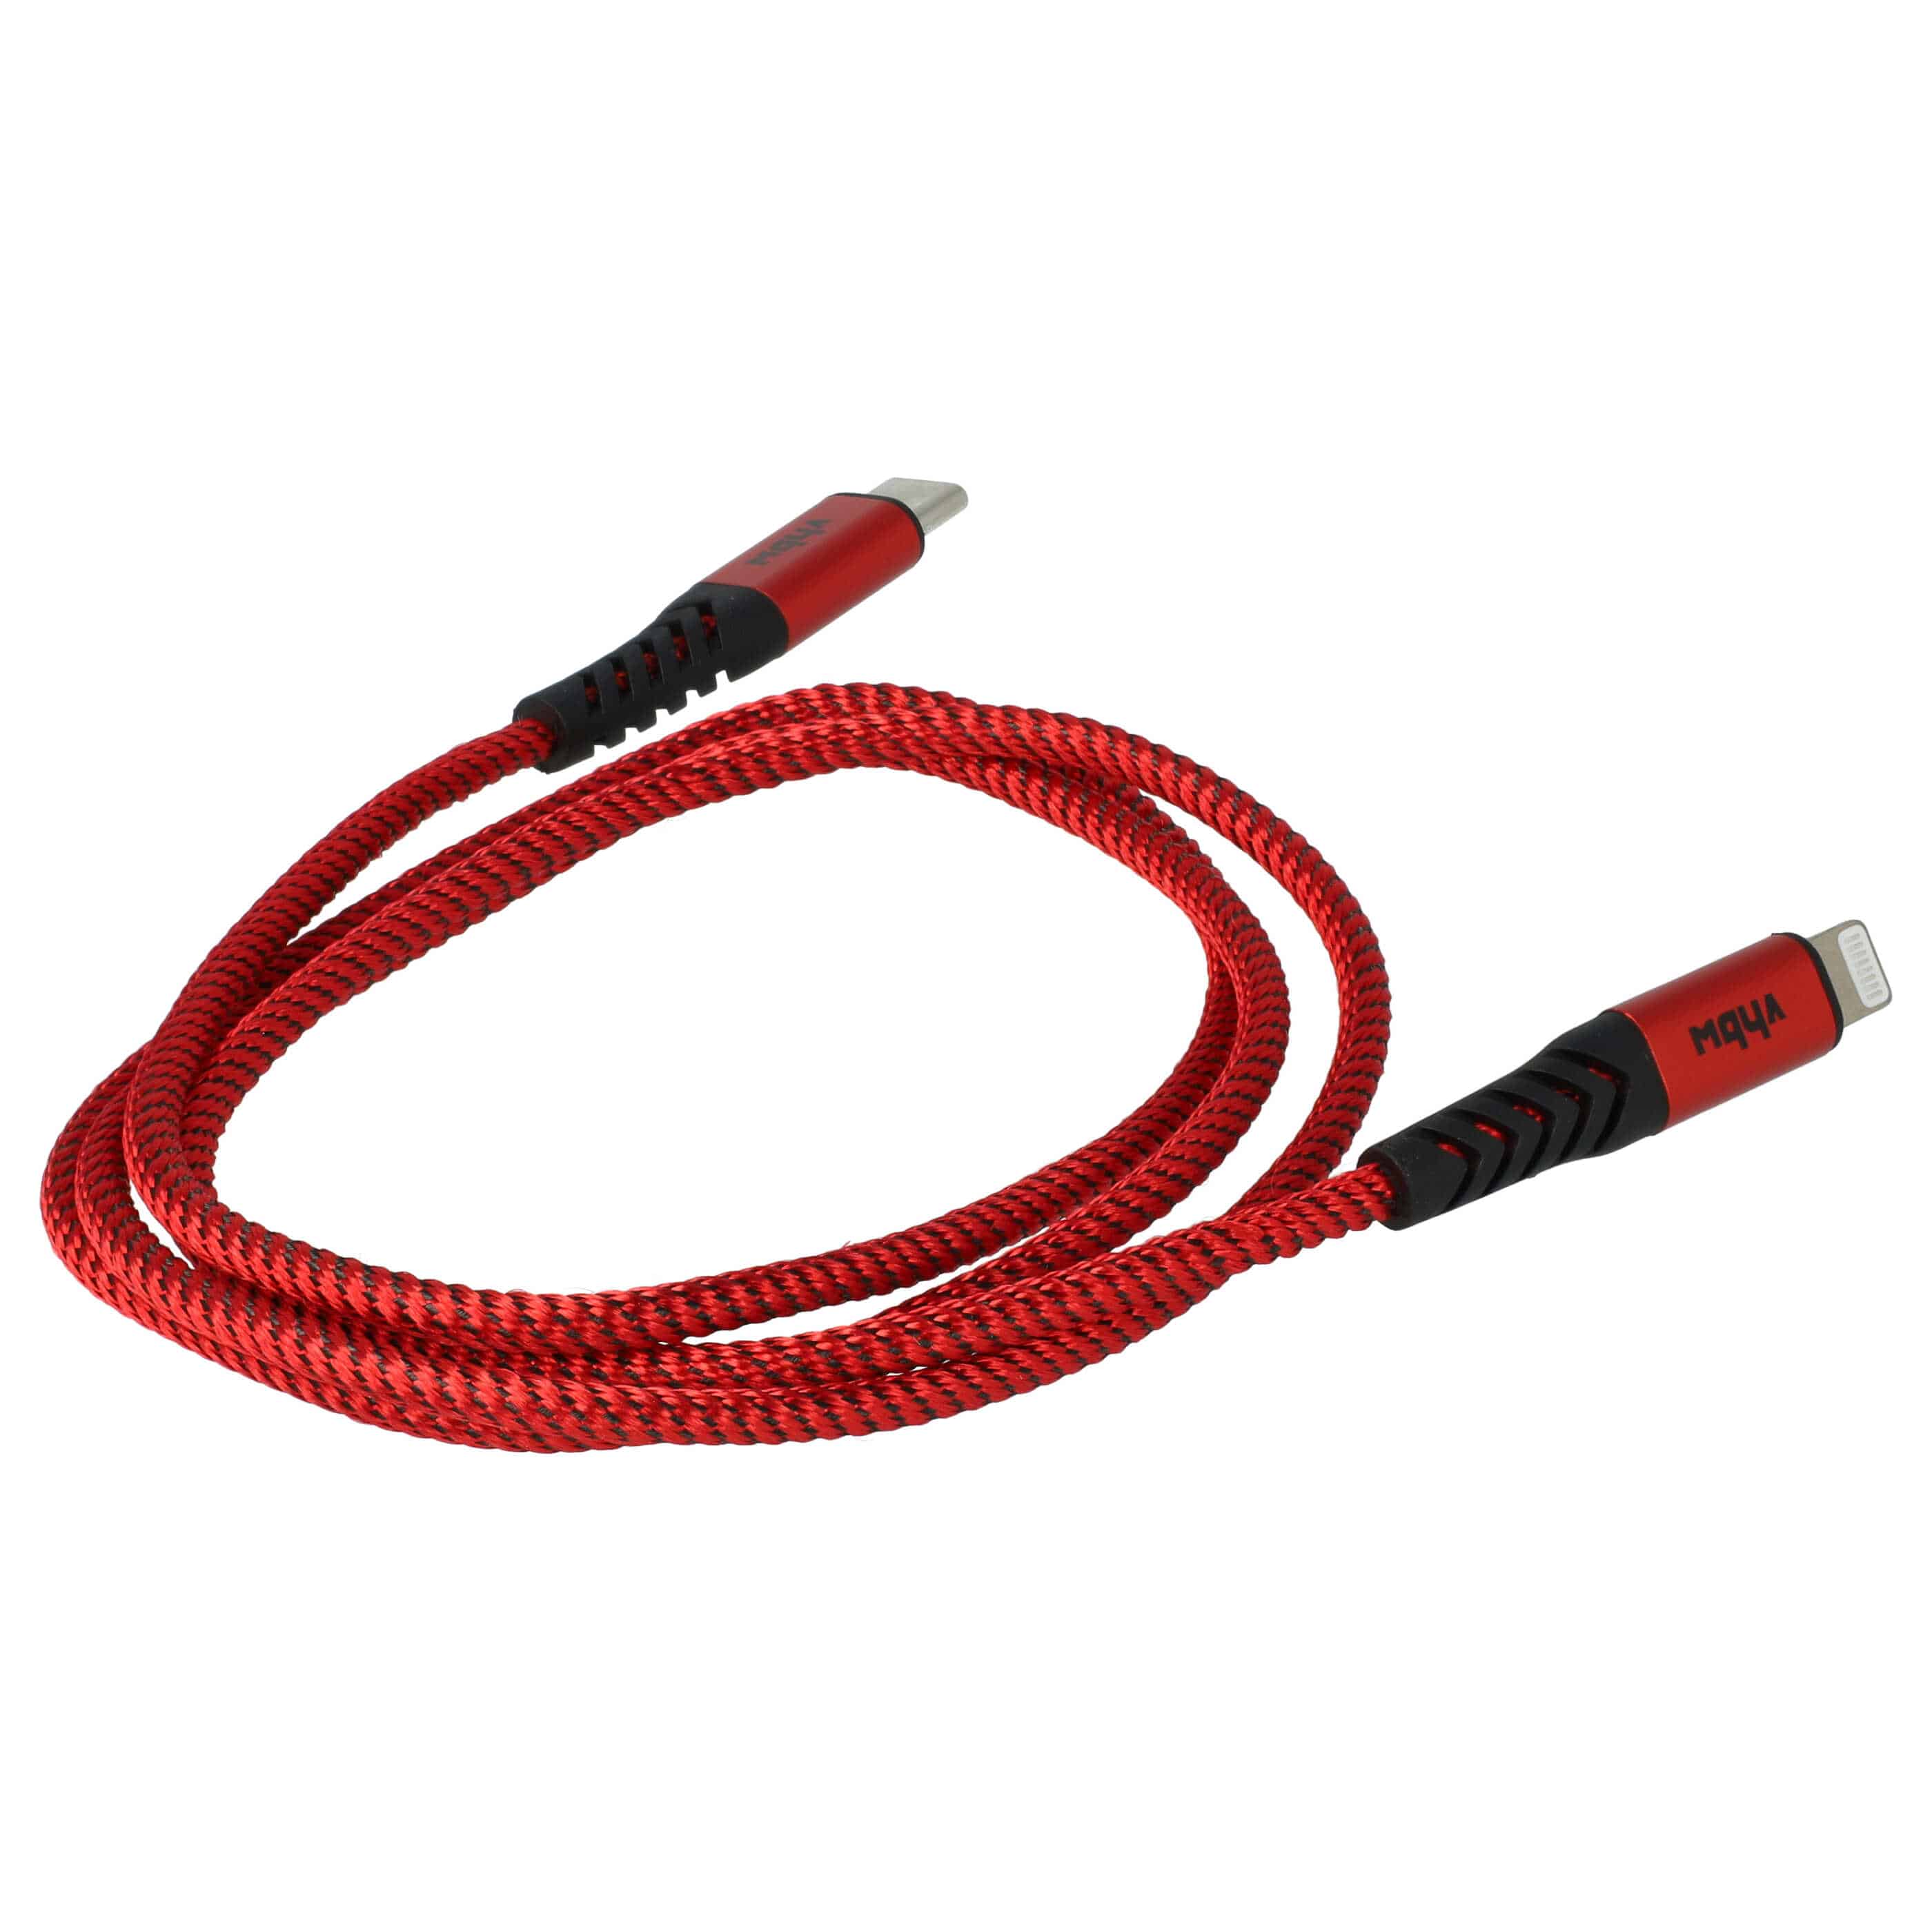 Câble Lightning vers USB C, Thunderbolt 3 pour iOS Apple MacBook - noir / rouge, 100cm